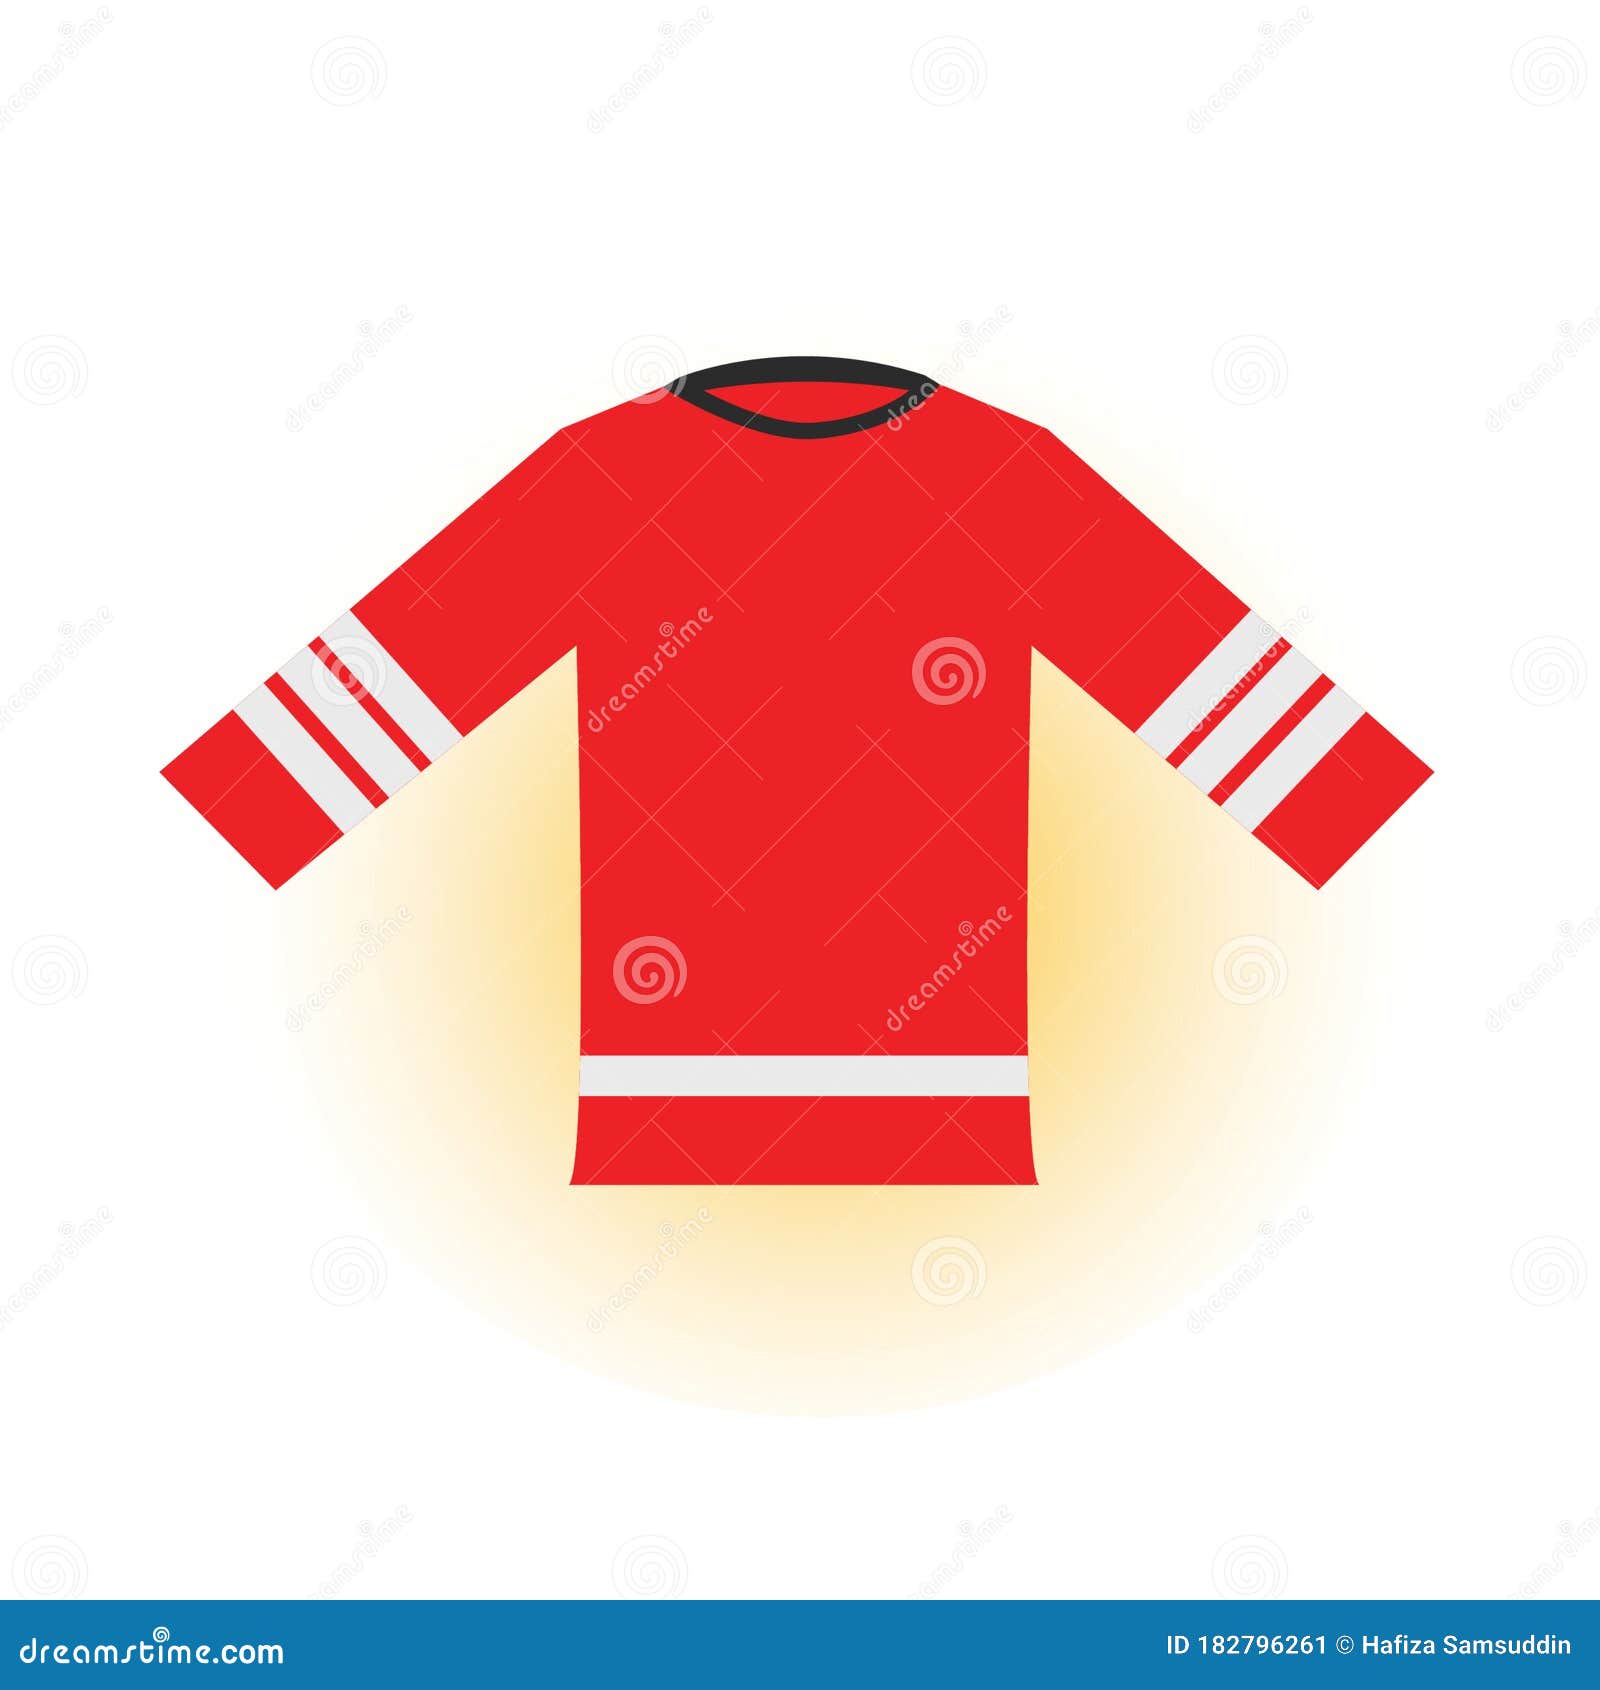 Template hockey practice jersey vector illustration flat sketch